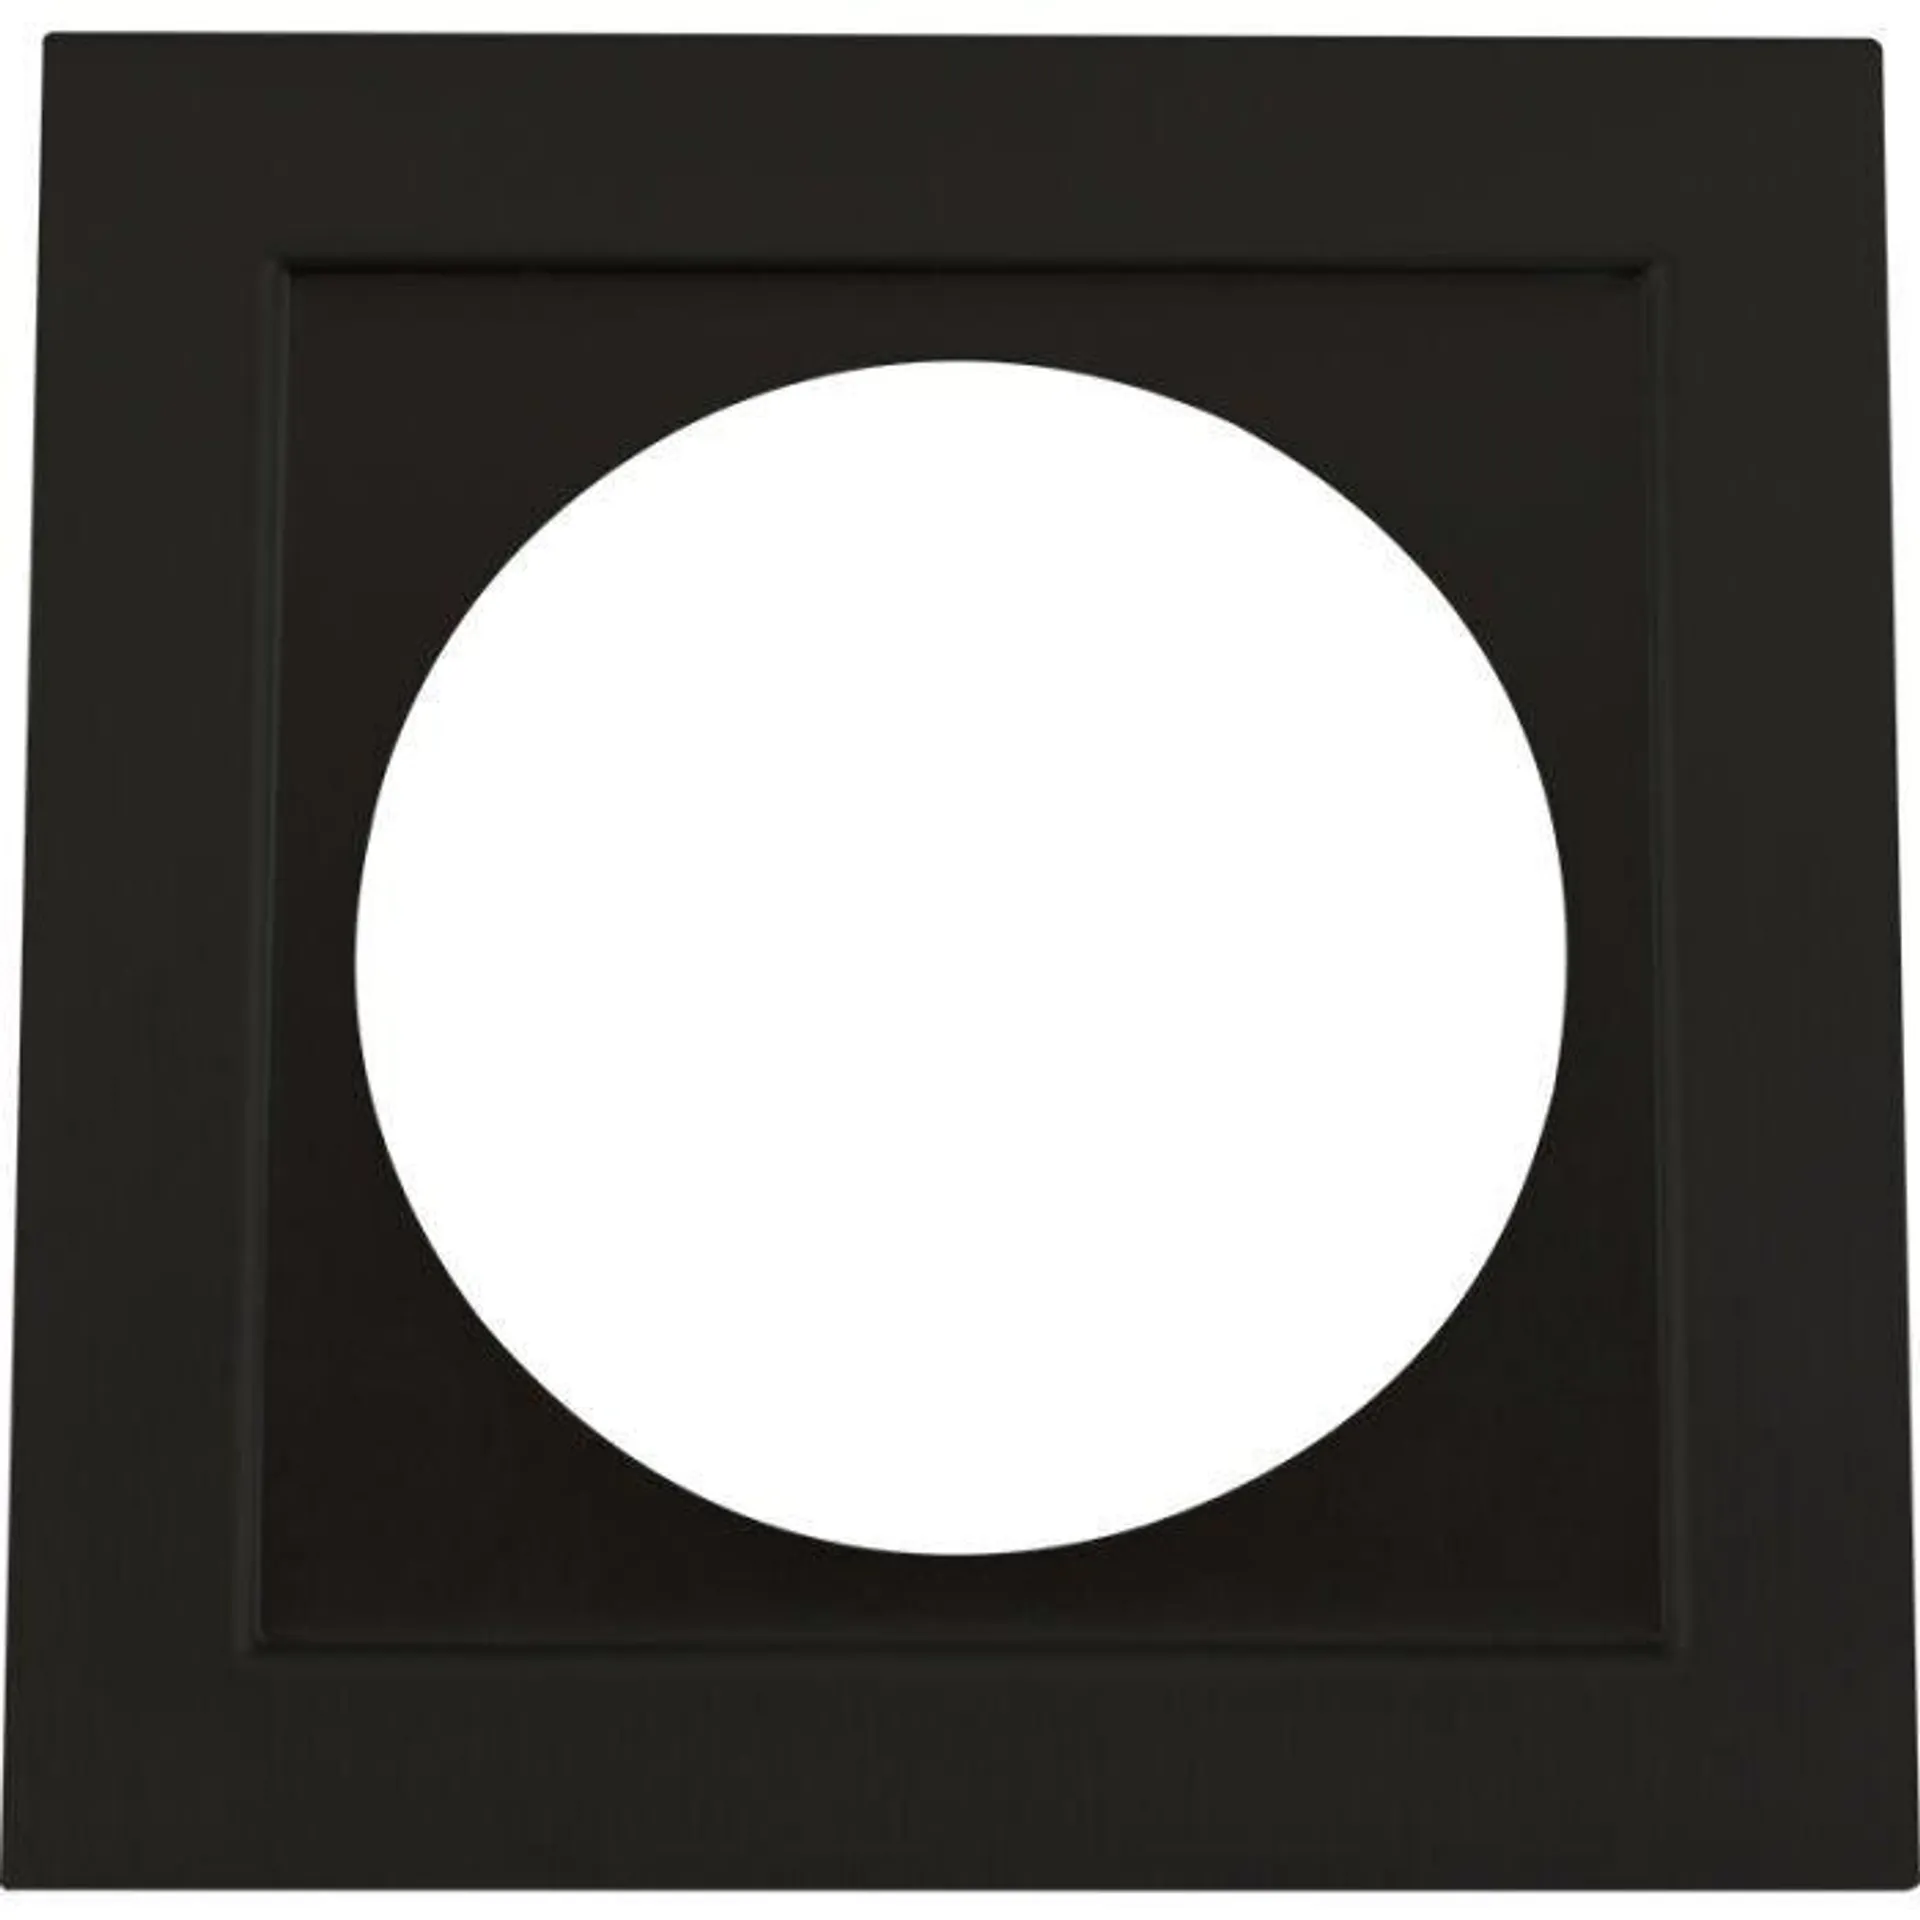 Junistar Lux Black Square Convertor Plate